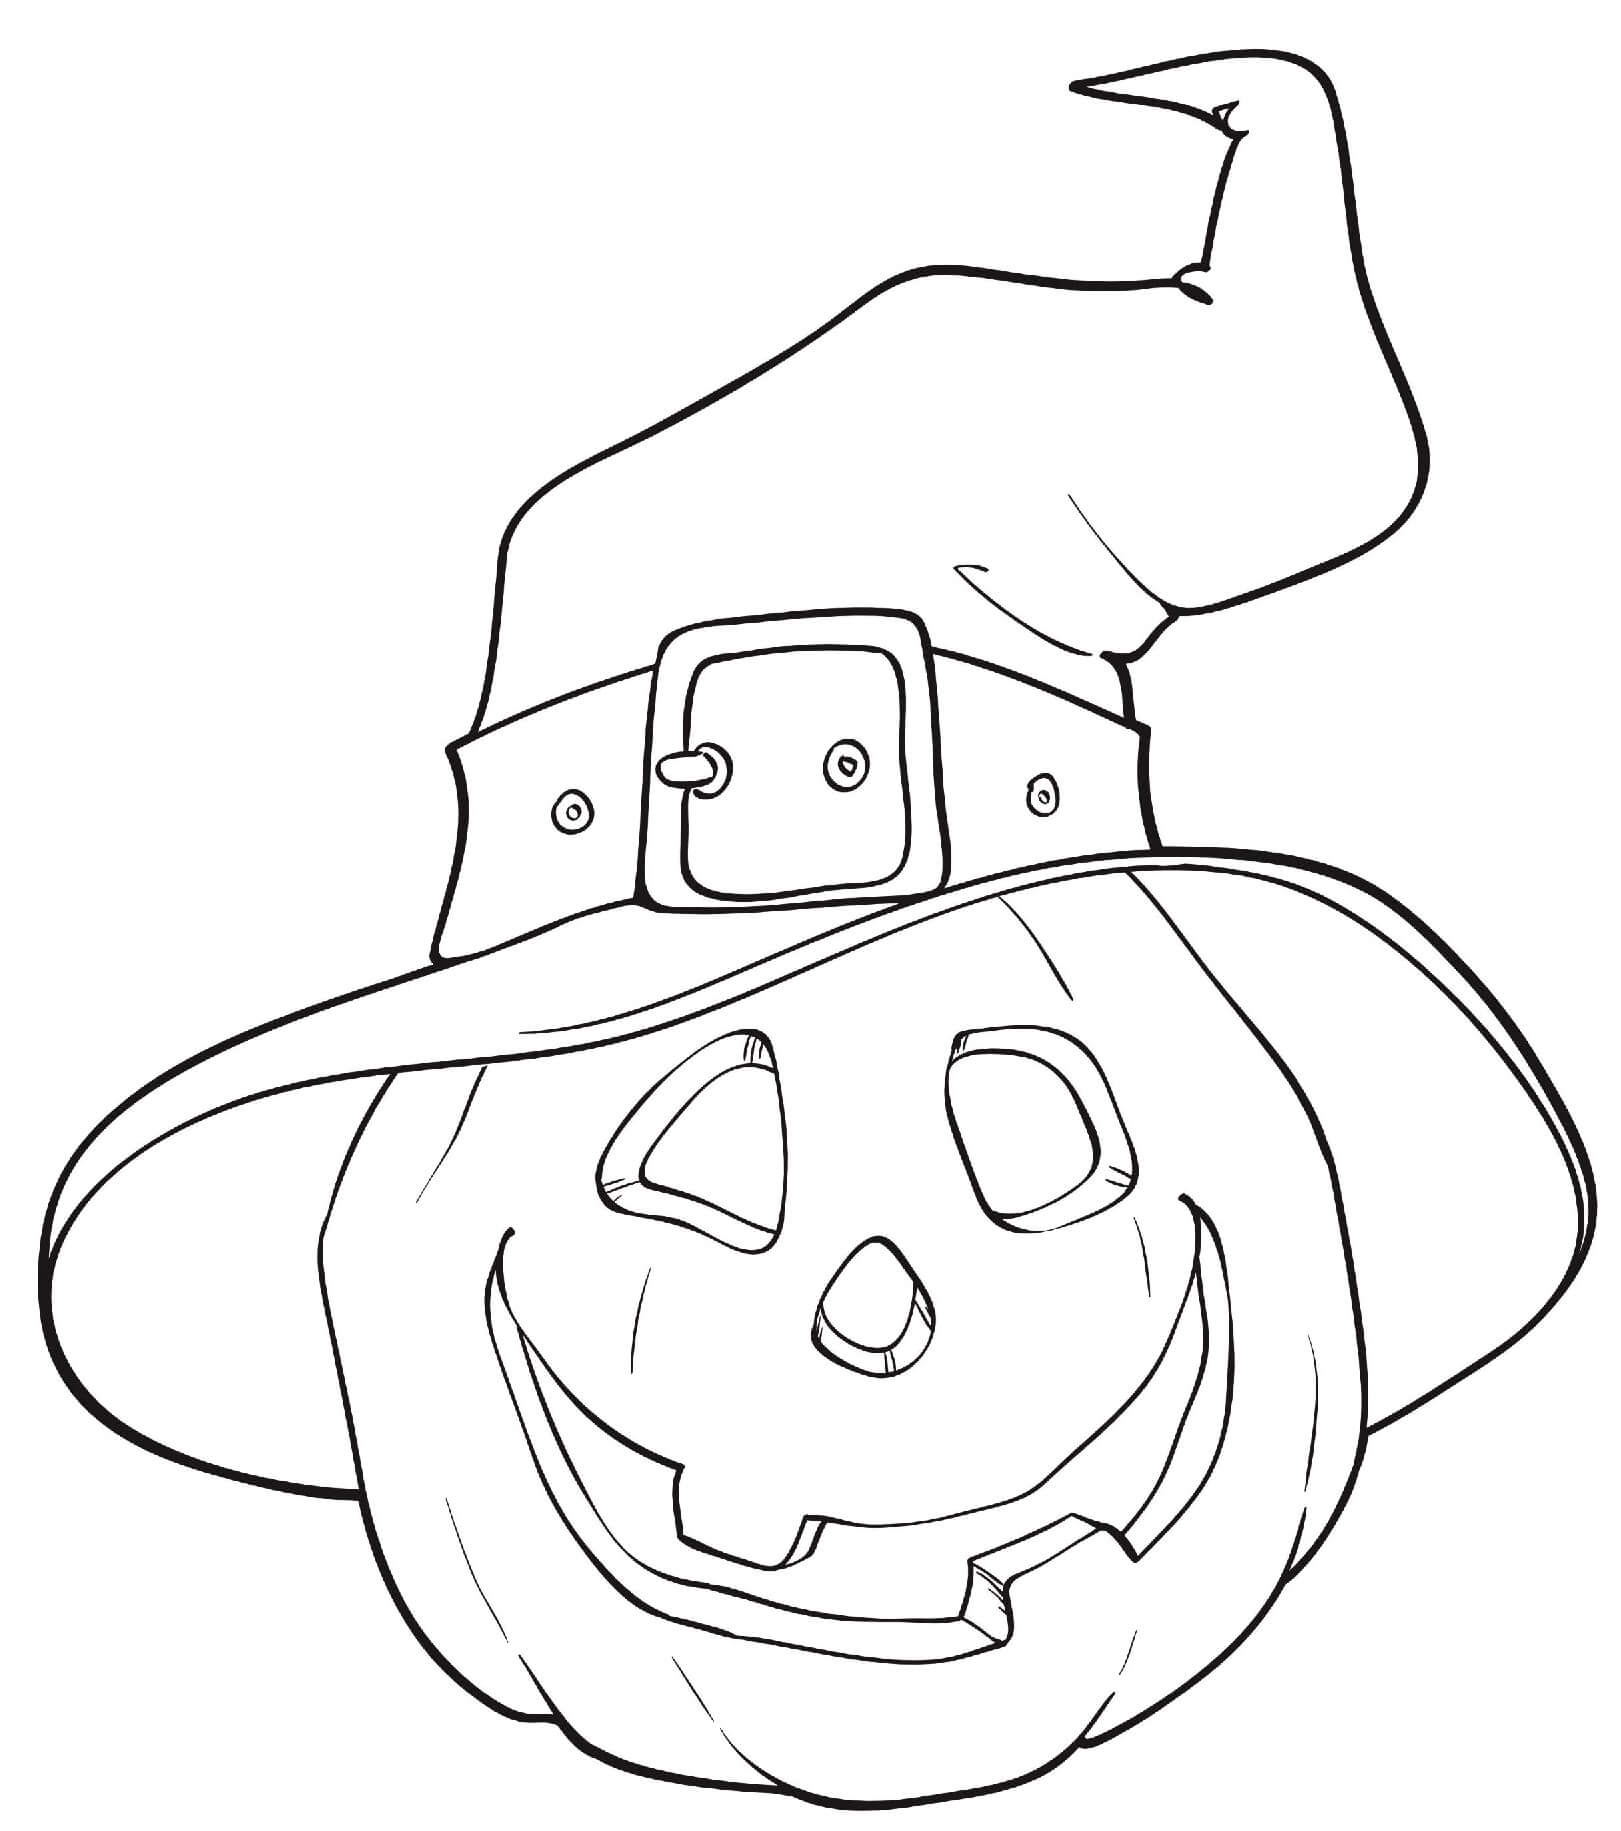 Раскраска для Хэллоуина тыква с шляпой